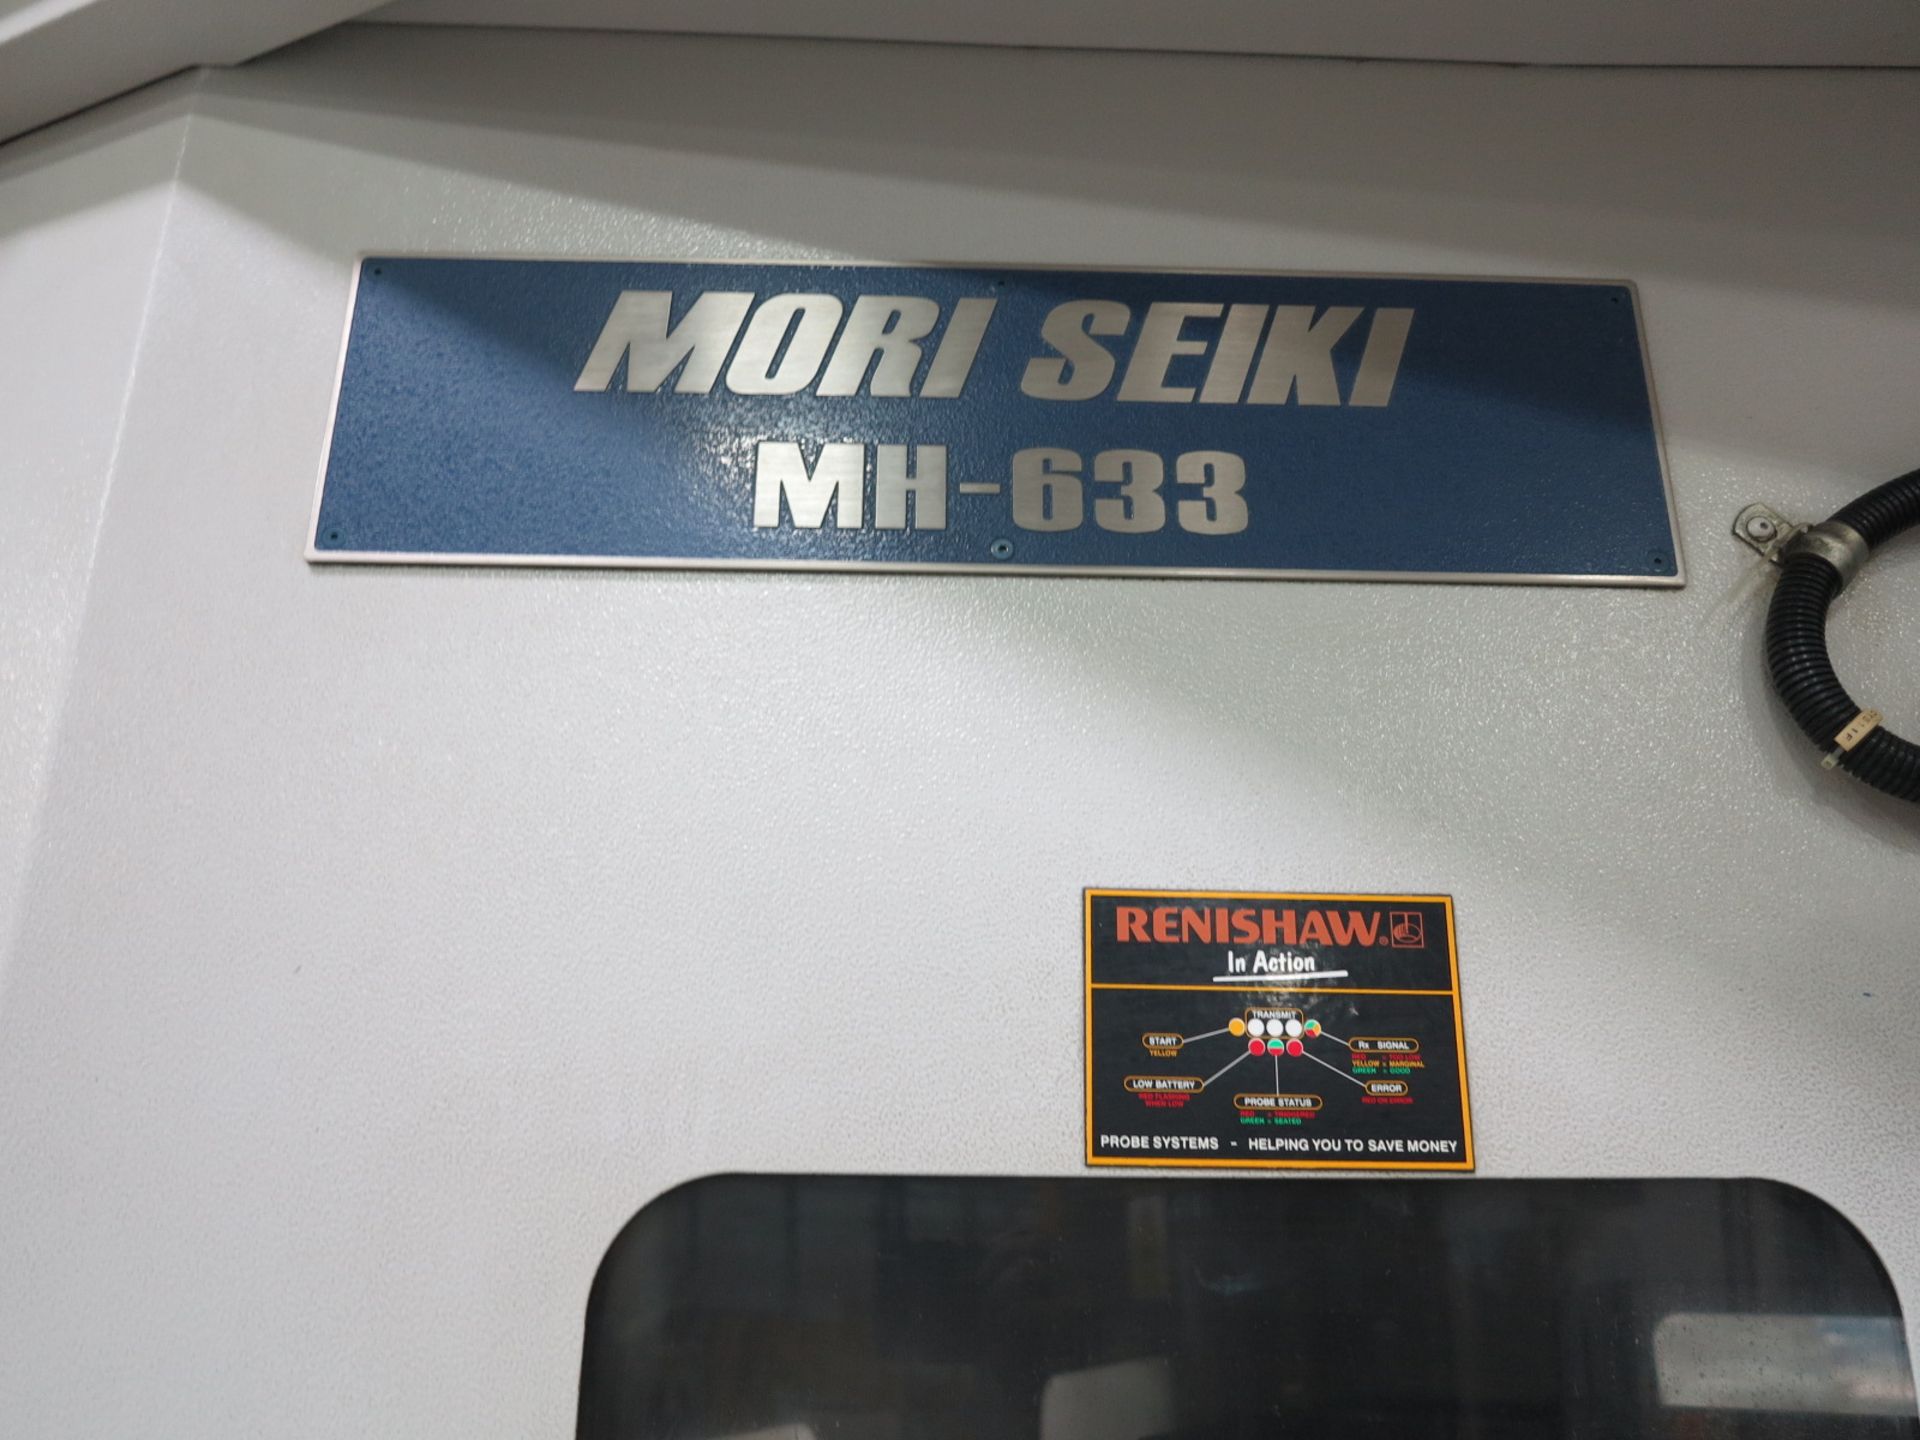 MORI-SEIKI MH-633 CNC Horizontal Machining Center, s/n MH630AE1008, Mori Seiki MSG-502 CNC